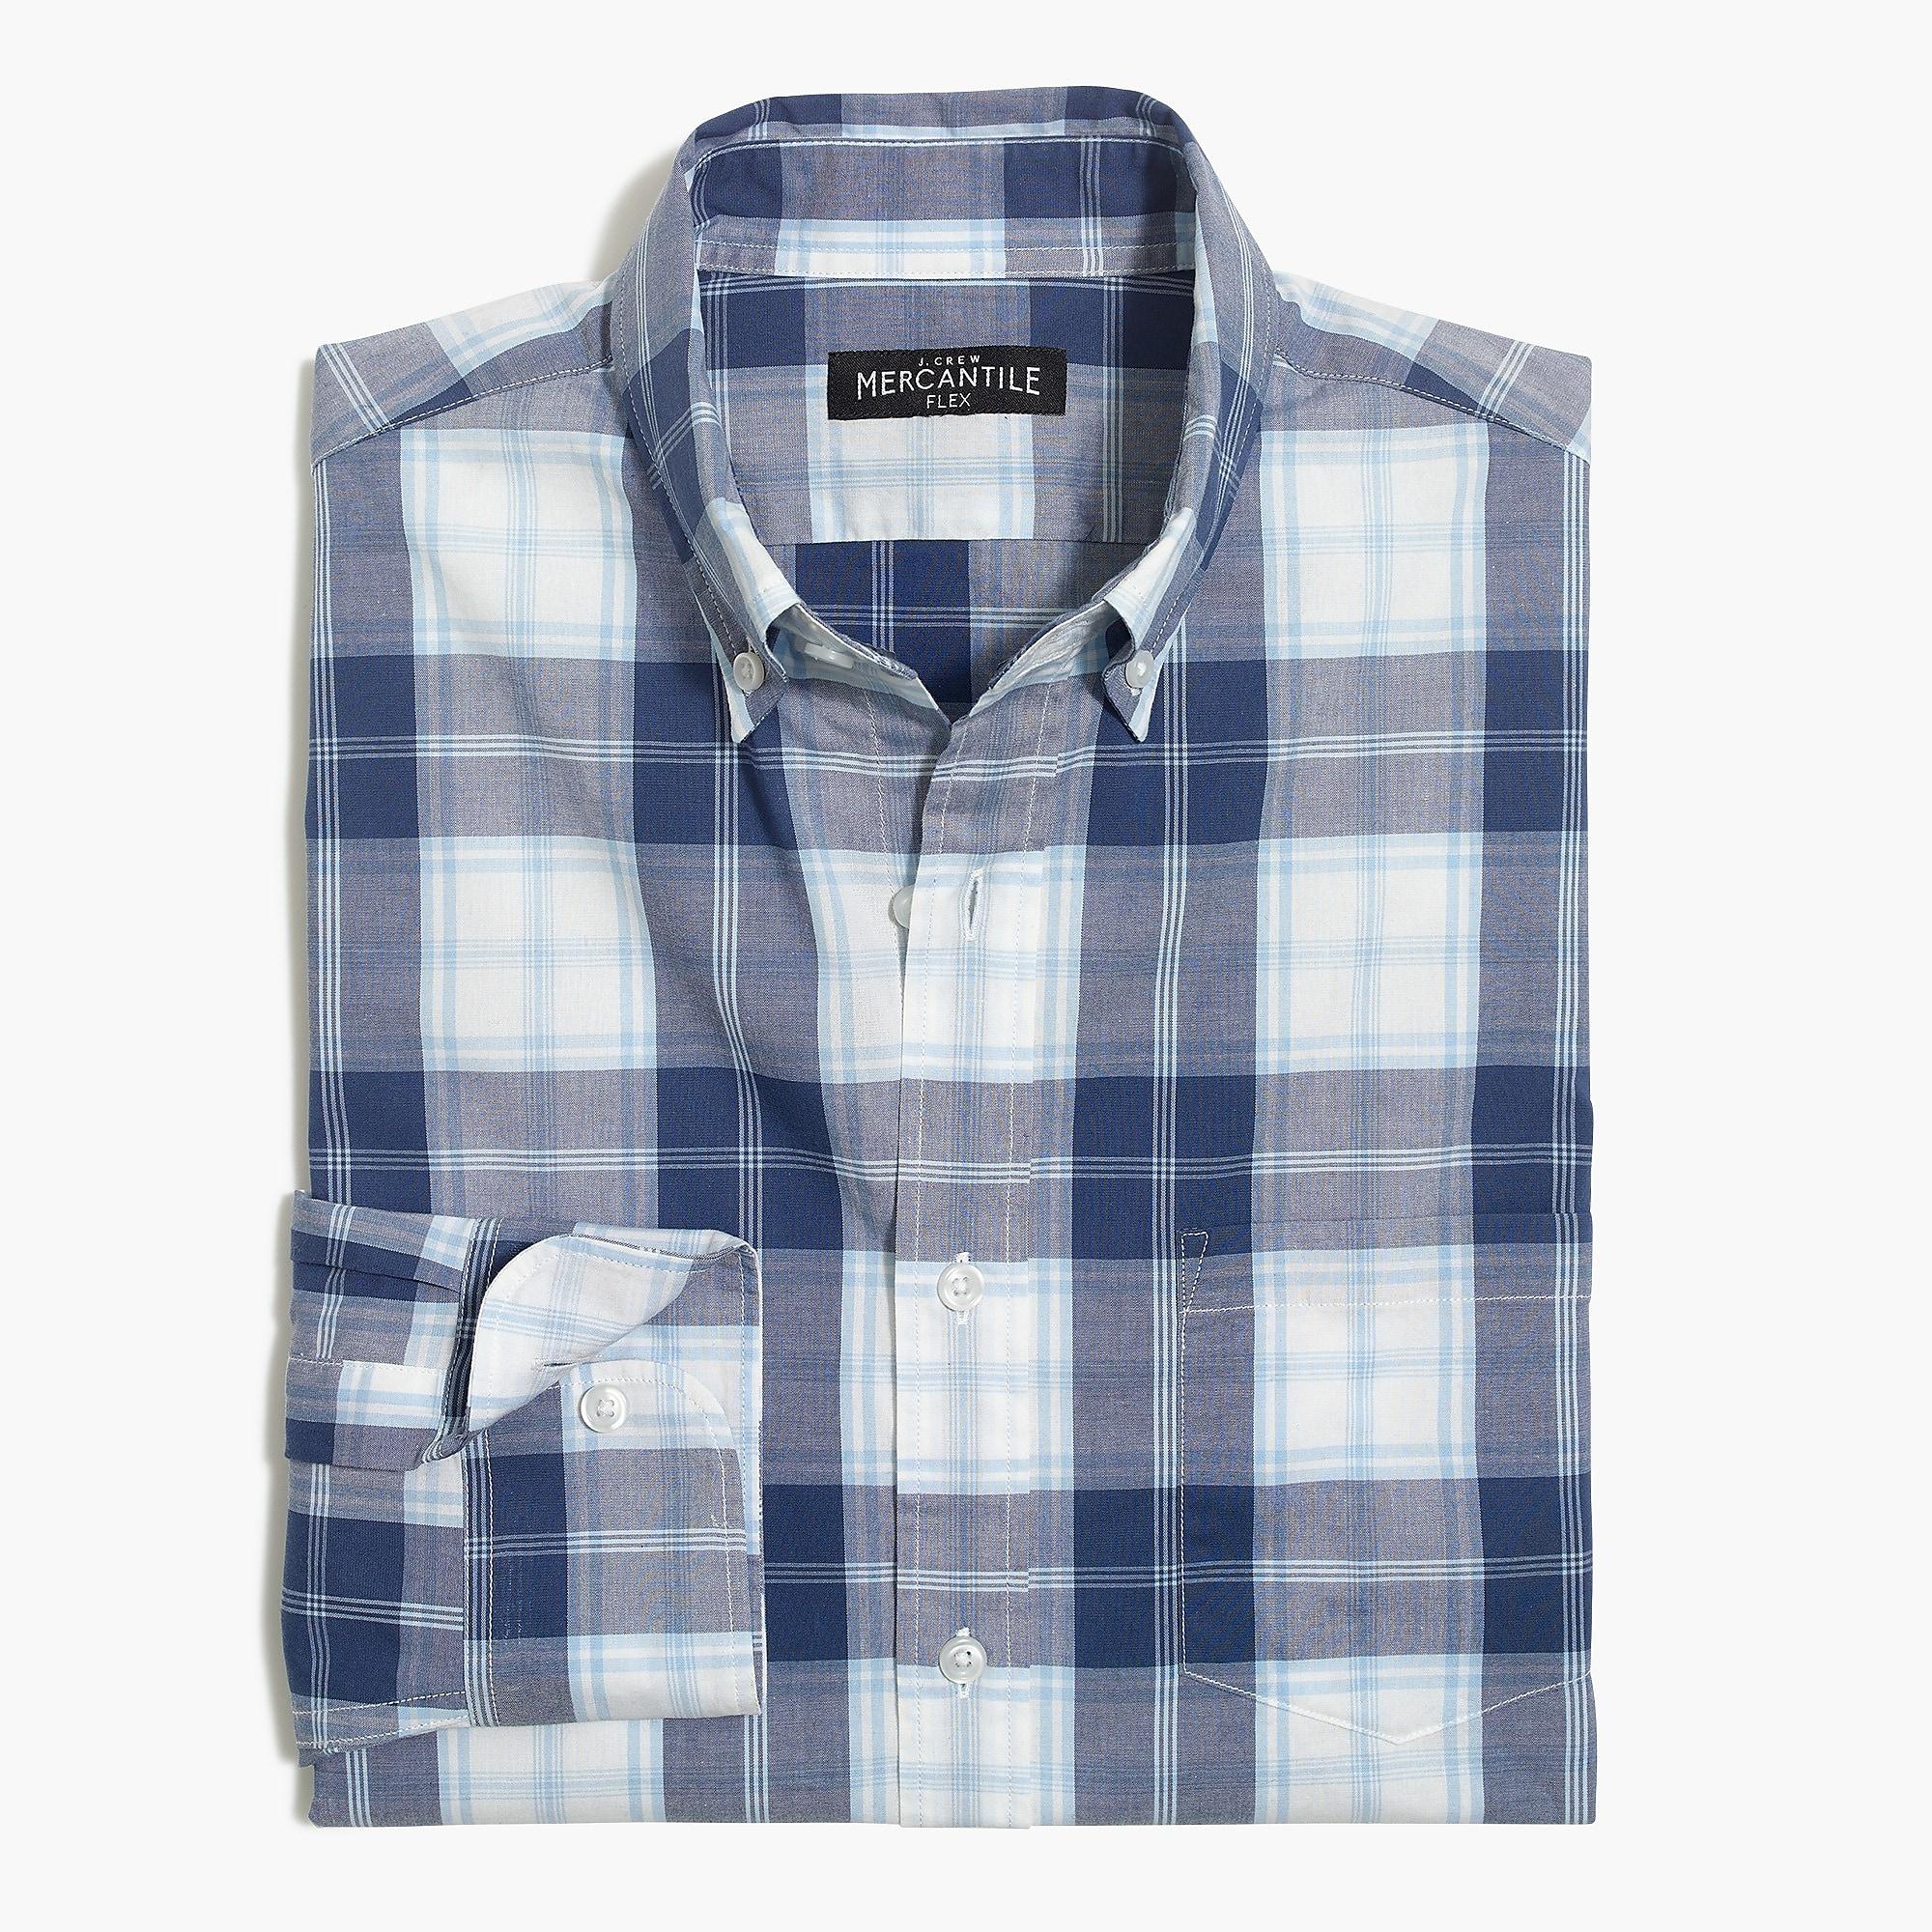 J.Crew Cotton Plaid Slim Flex Casual Shirt in Blue for Men - Lyst